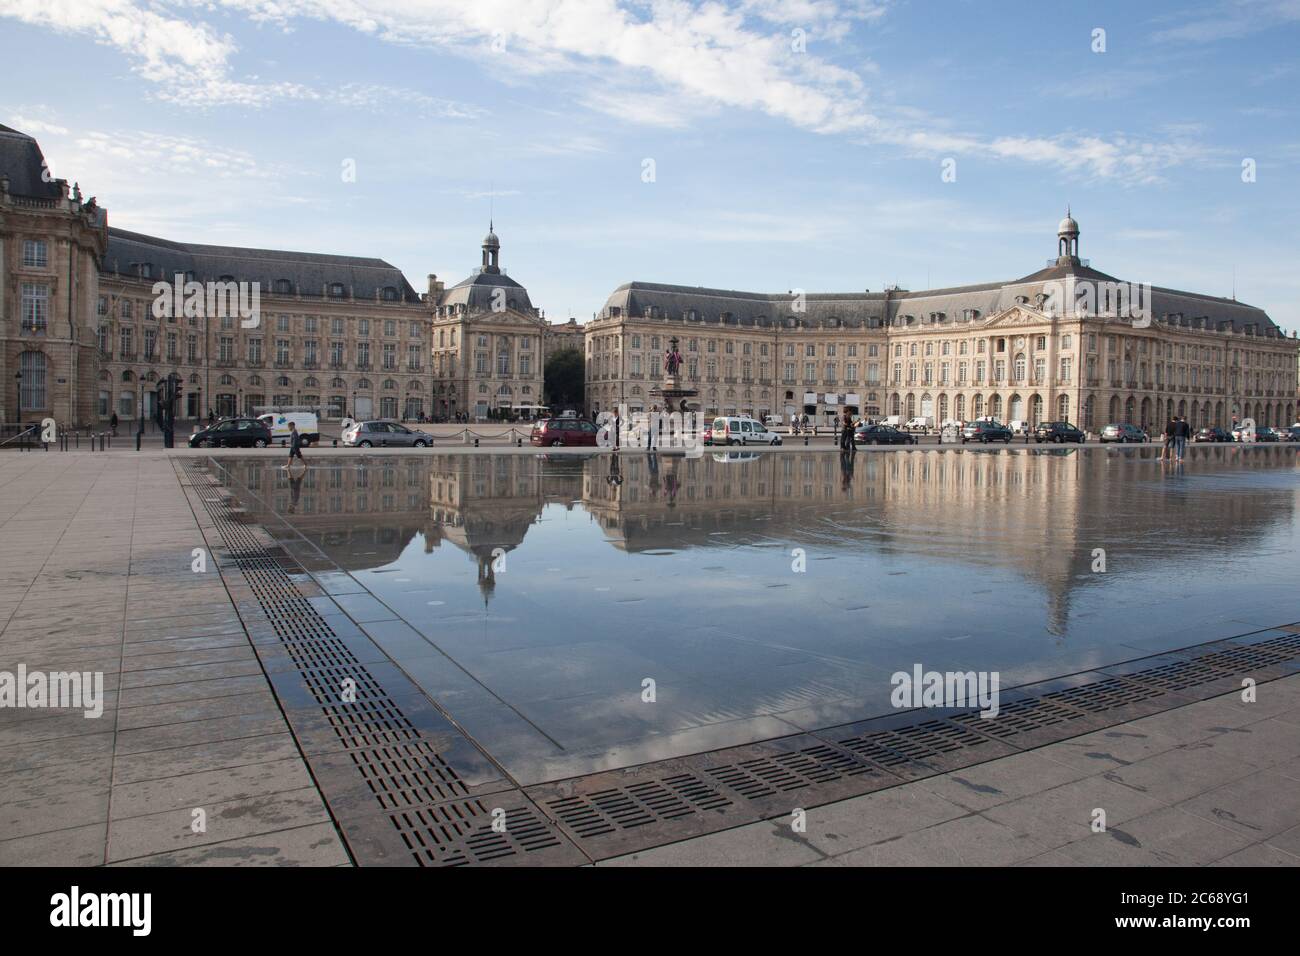 Bordeaux , Aquitanien / Frankreich - 11 07 2019 : Bordeaux Platz Place de  la Bourse Spiegelung aus dem Wasser Spiegel im alten Stadtzentrum  Frankreich Stockfotografie - Alamy